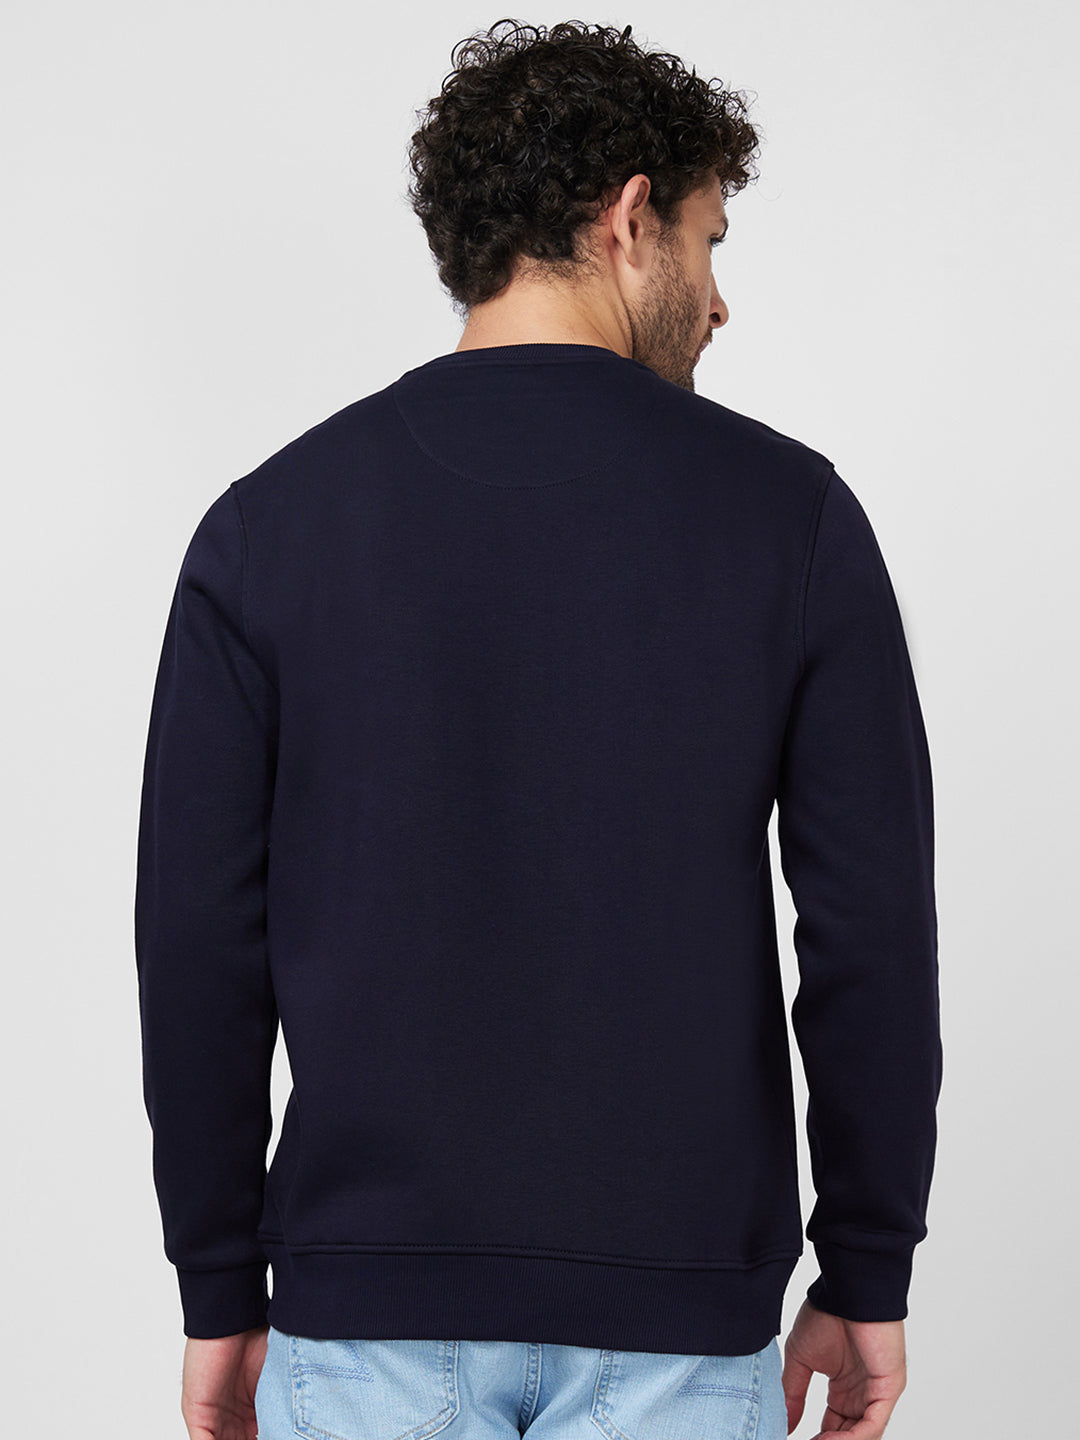 Spykar Slim Fit Round Neck Full Sleeve Blue Sweatshirt For Men